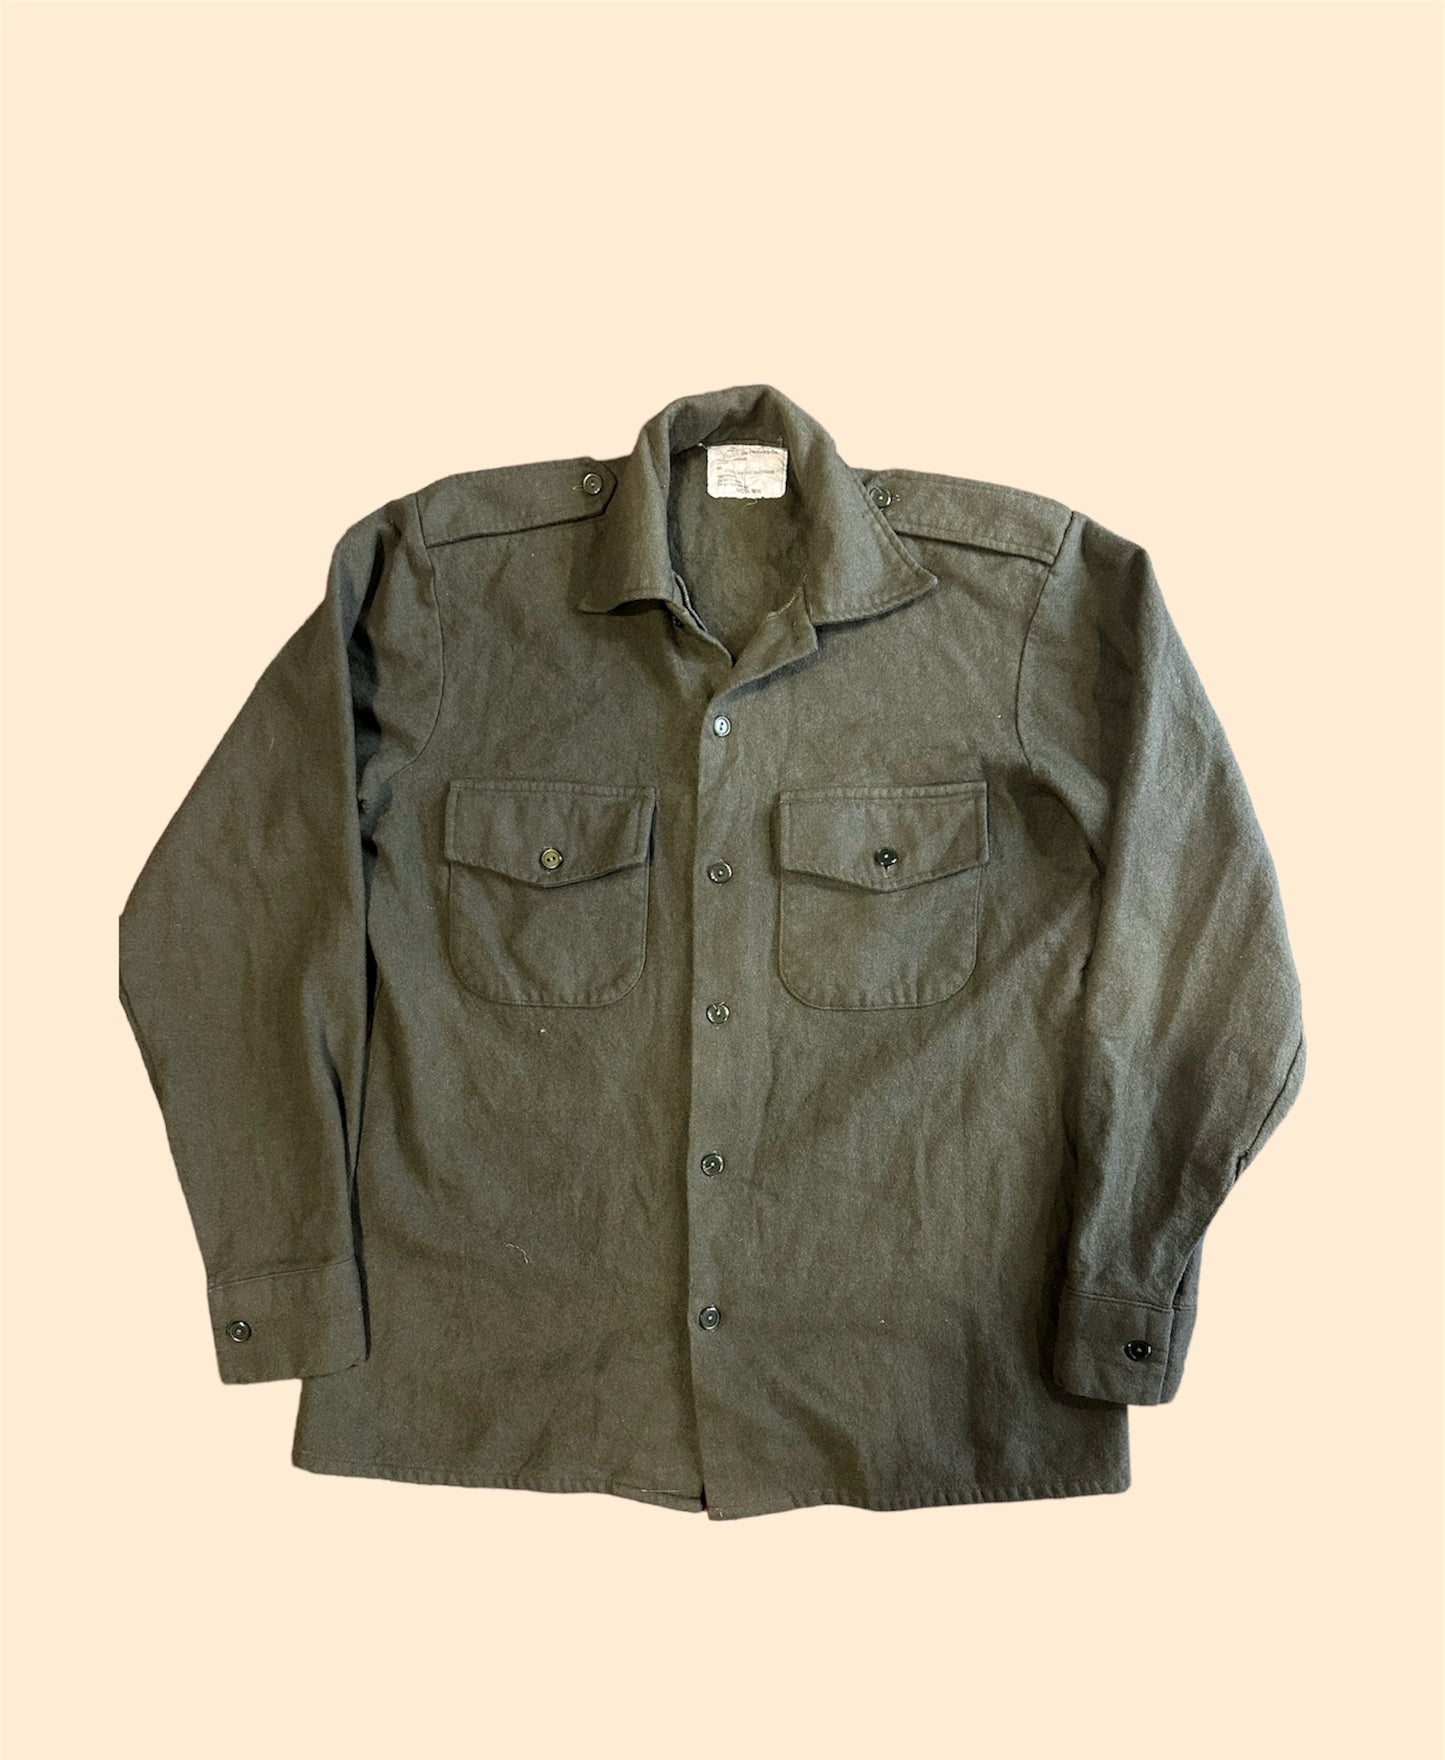 Military shirt lana tg.44/46